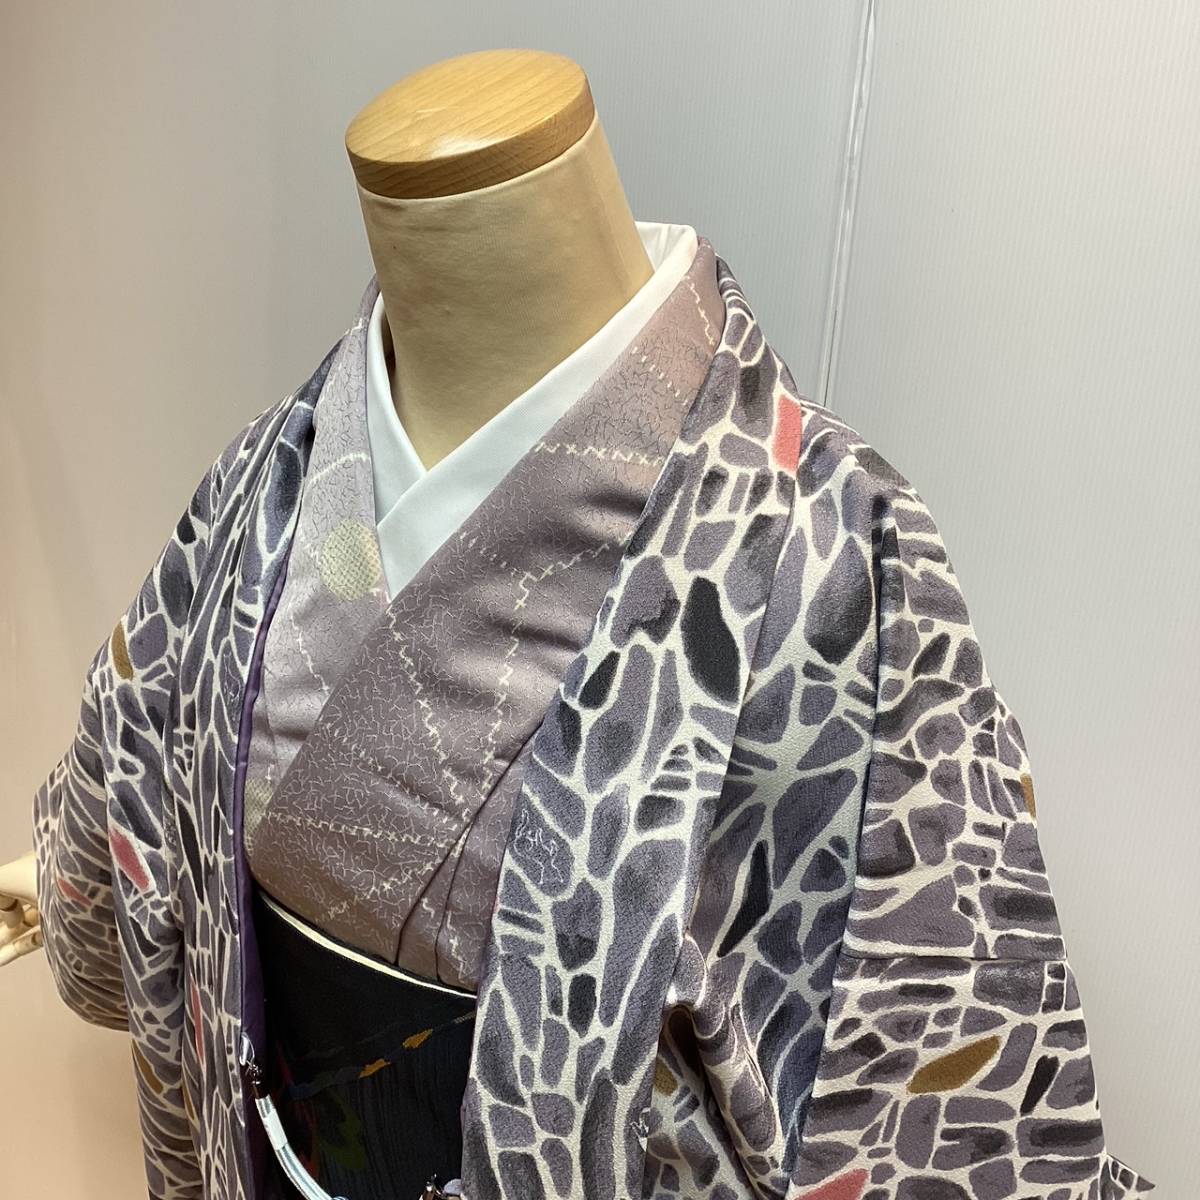  brand new feather woven ha165. what .. cat pattern kimono coat ... kimono new goods postage included 